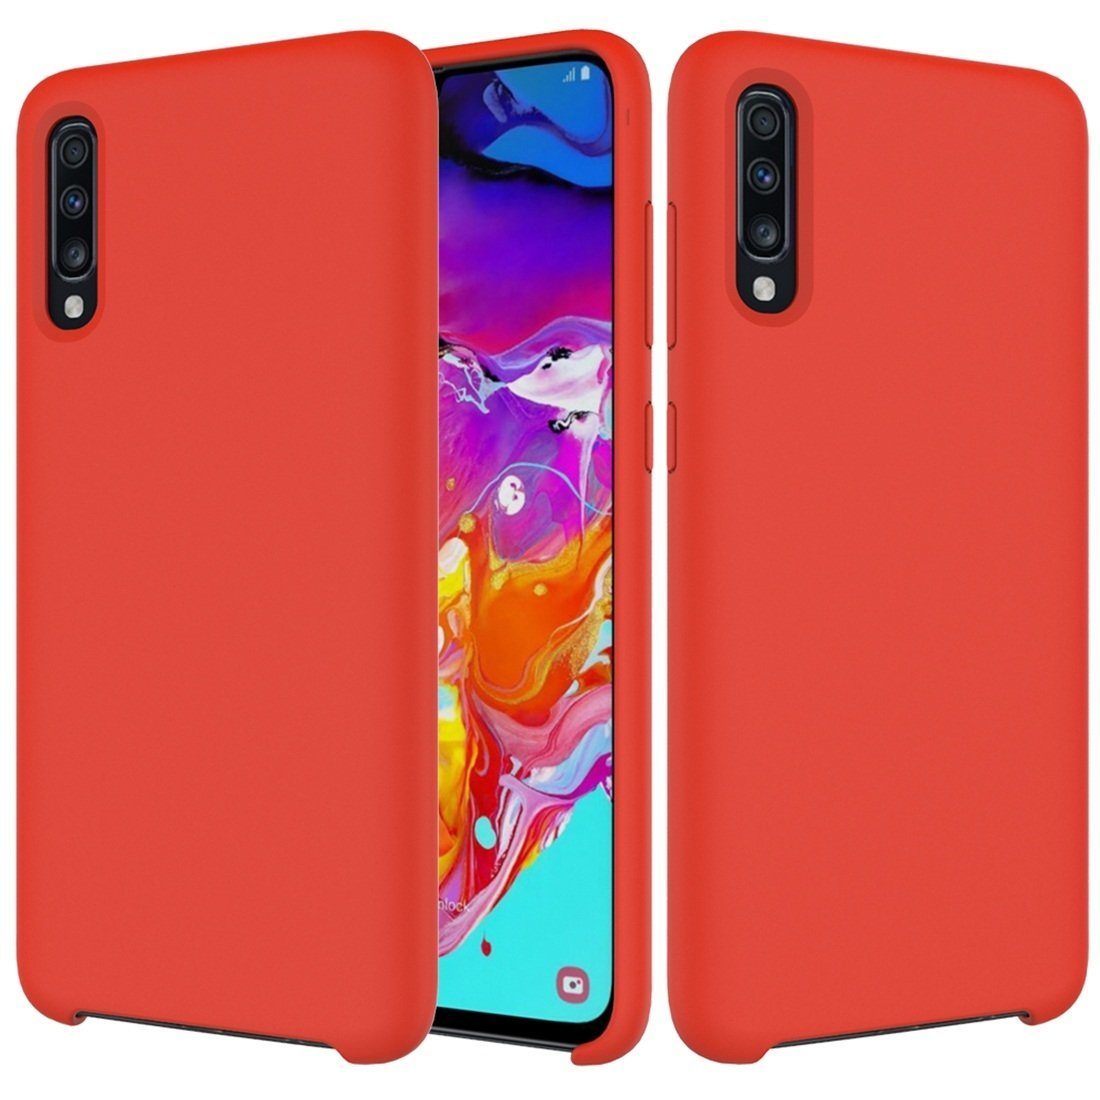 Чехол накладка Silicon Cover для SAMSUNG Galaxy A50 (SM-A505), A30s (SM-A307), A50s (SM-A507), силикон, бархат, цвет карминный красный.